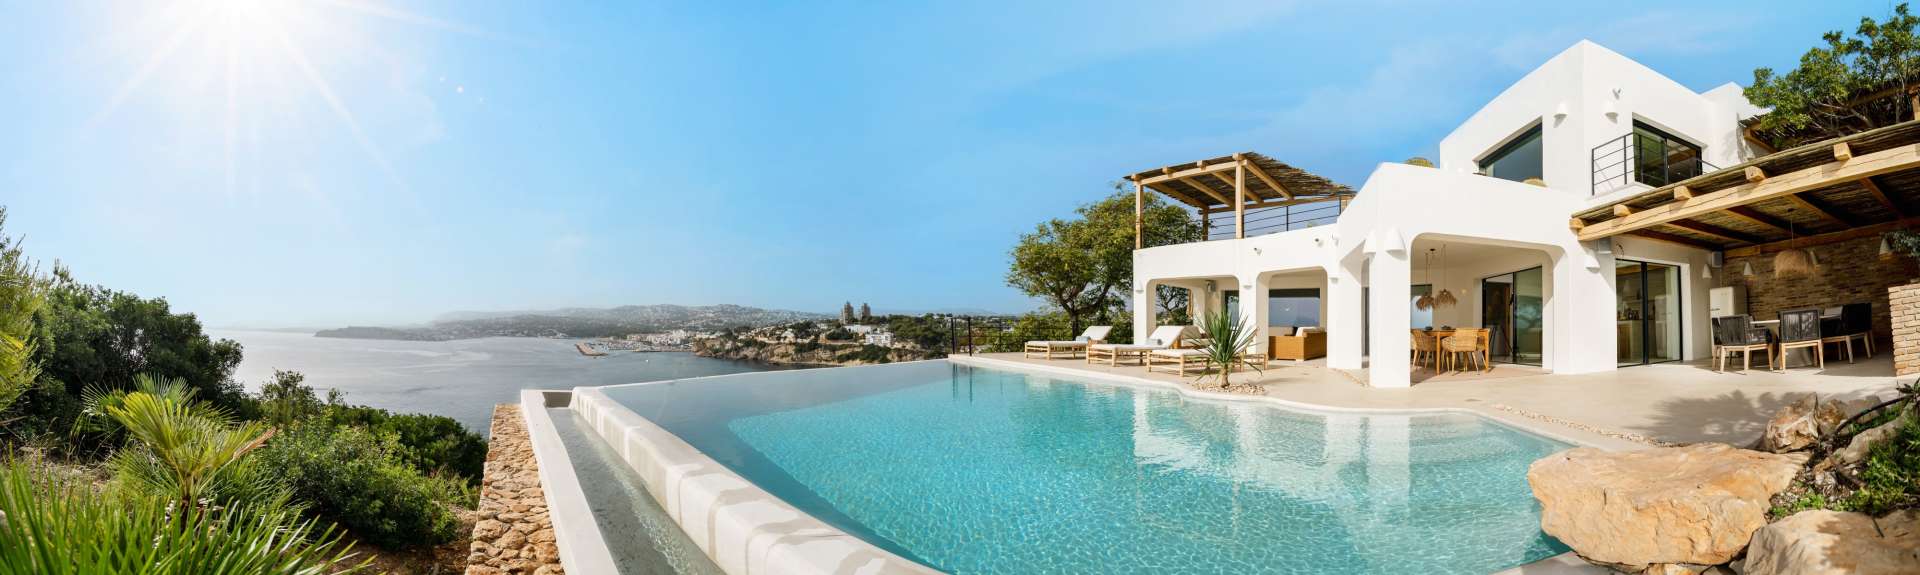 COSTA HOUSES ®️  The #1 REAL ESTATE EXPERT for Mega Luxury Villas in Javea Costa Blanca Spain (1)